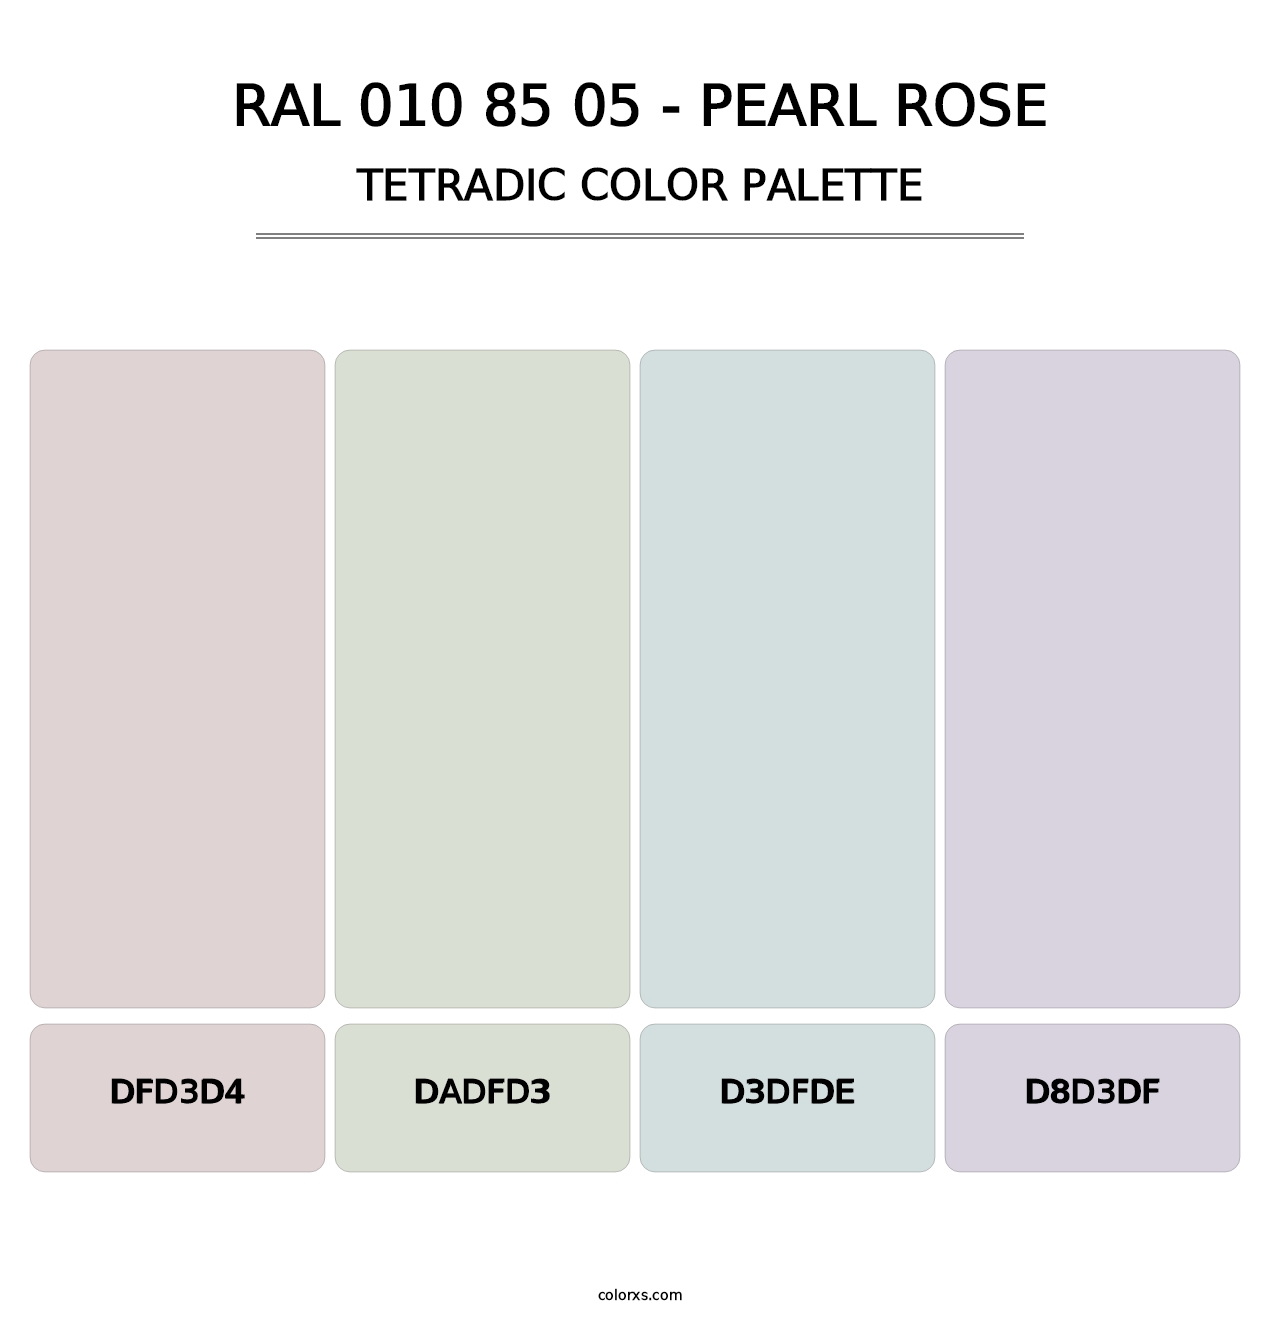 RAL 010 85 05 - Pearl Rose - Tetradic Color Palette